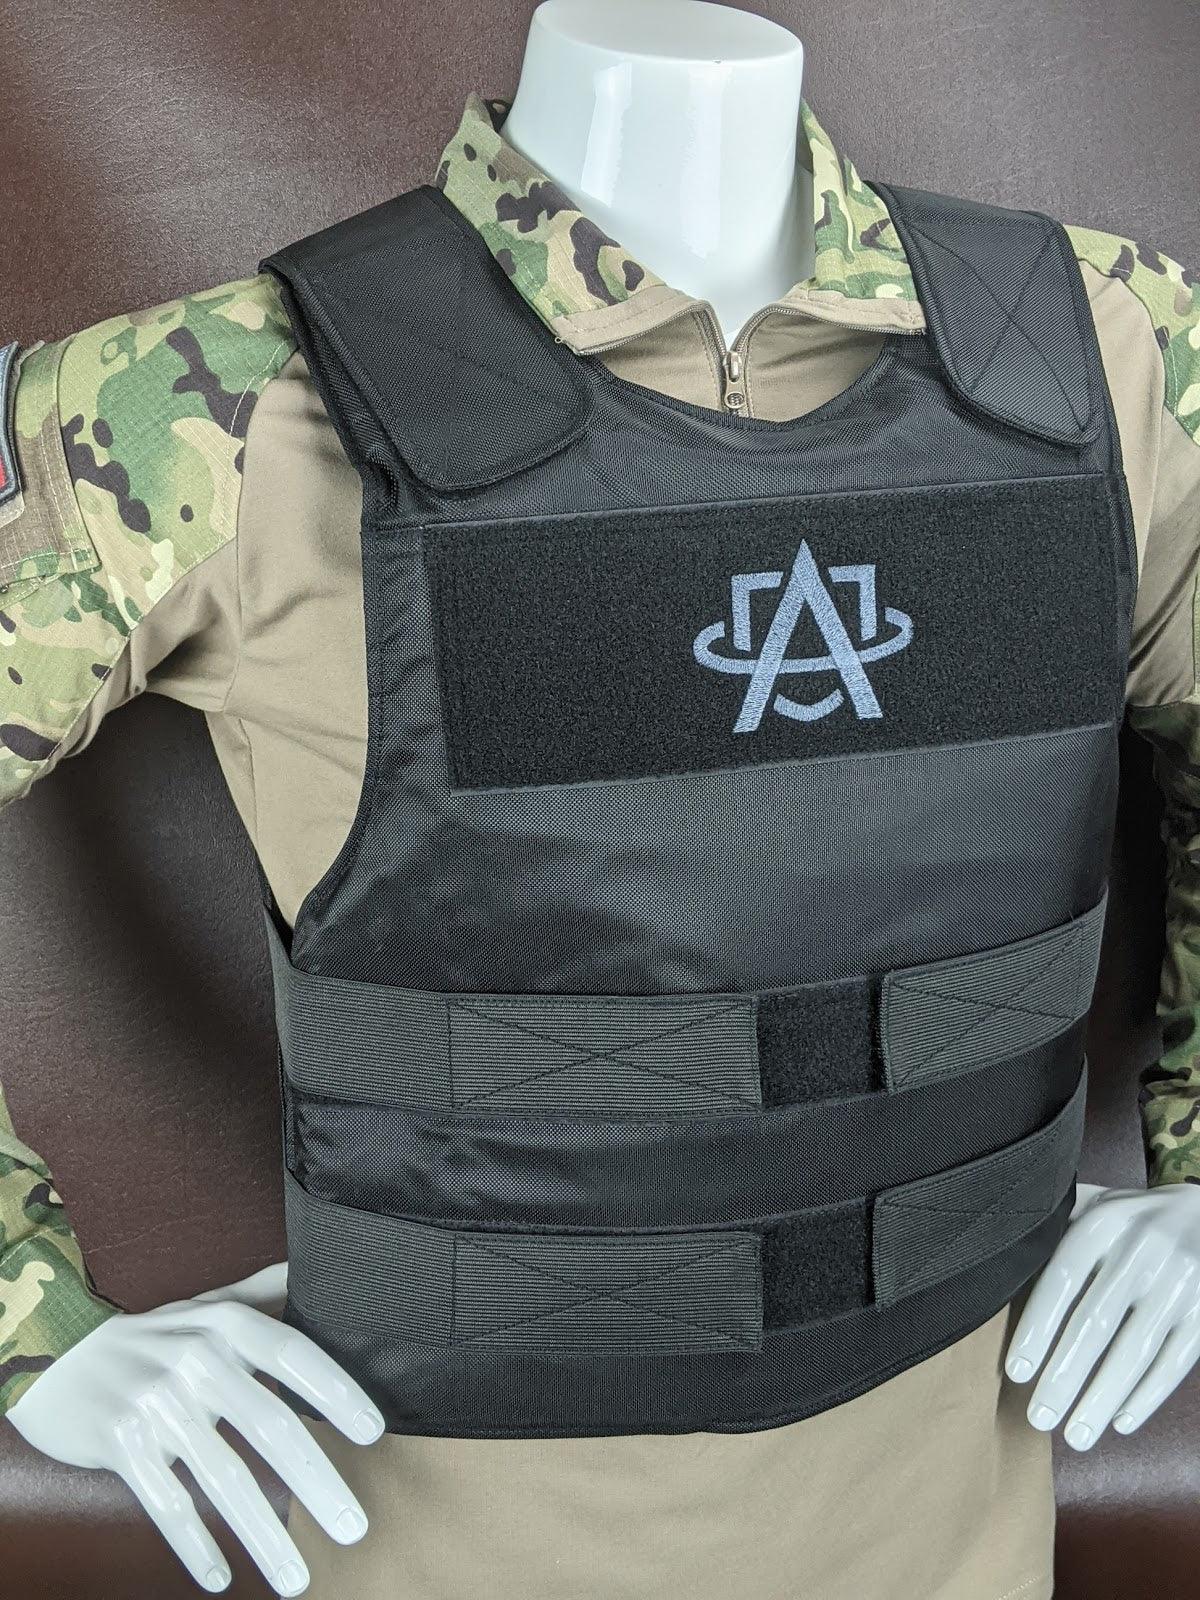 New Bullet Proof Vest Technology – Better than Kevlar? - Extreme